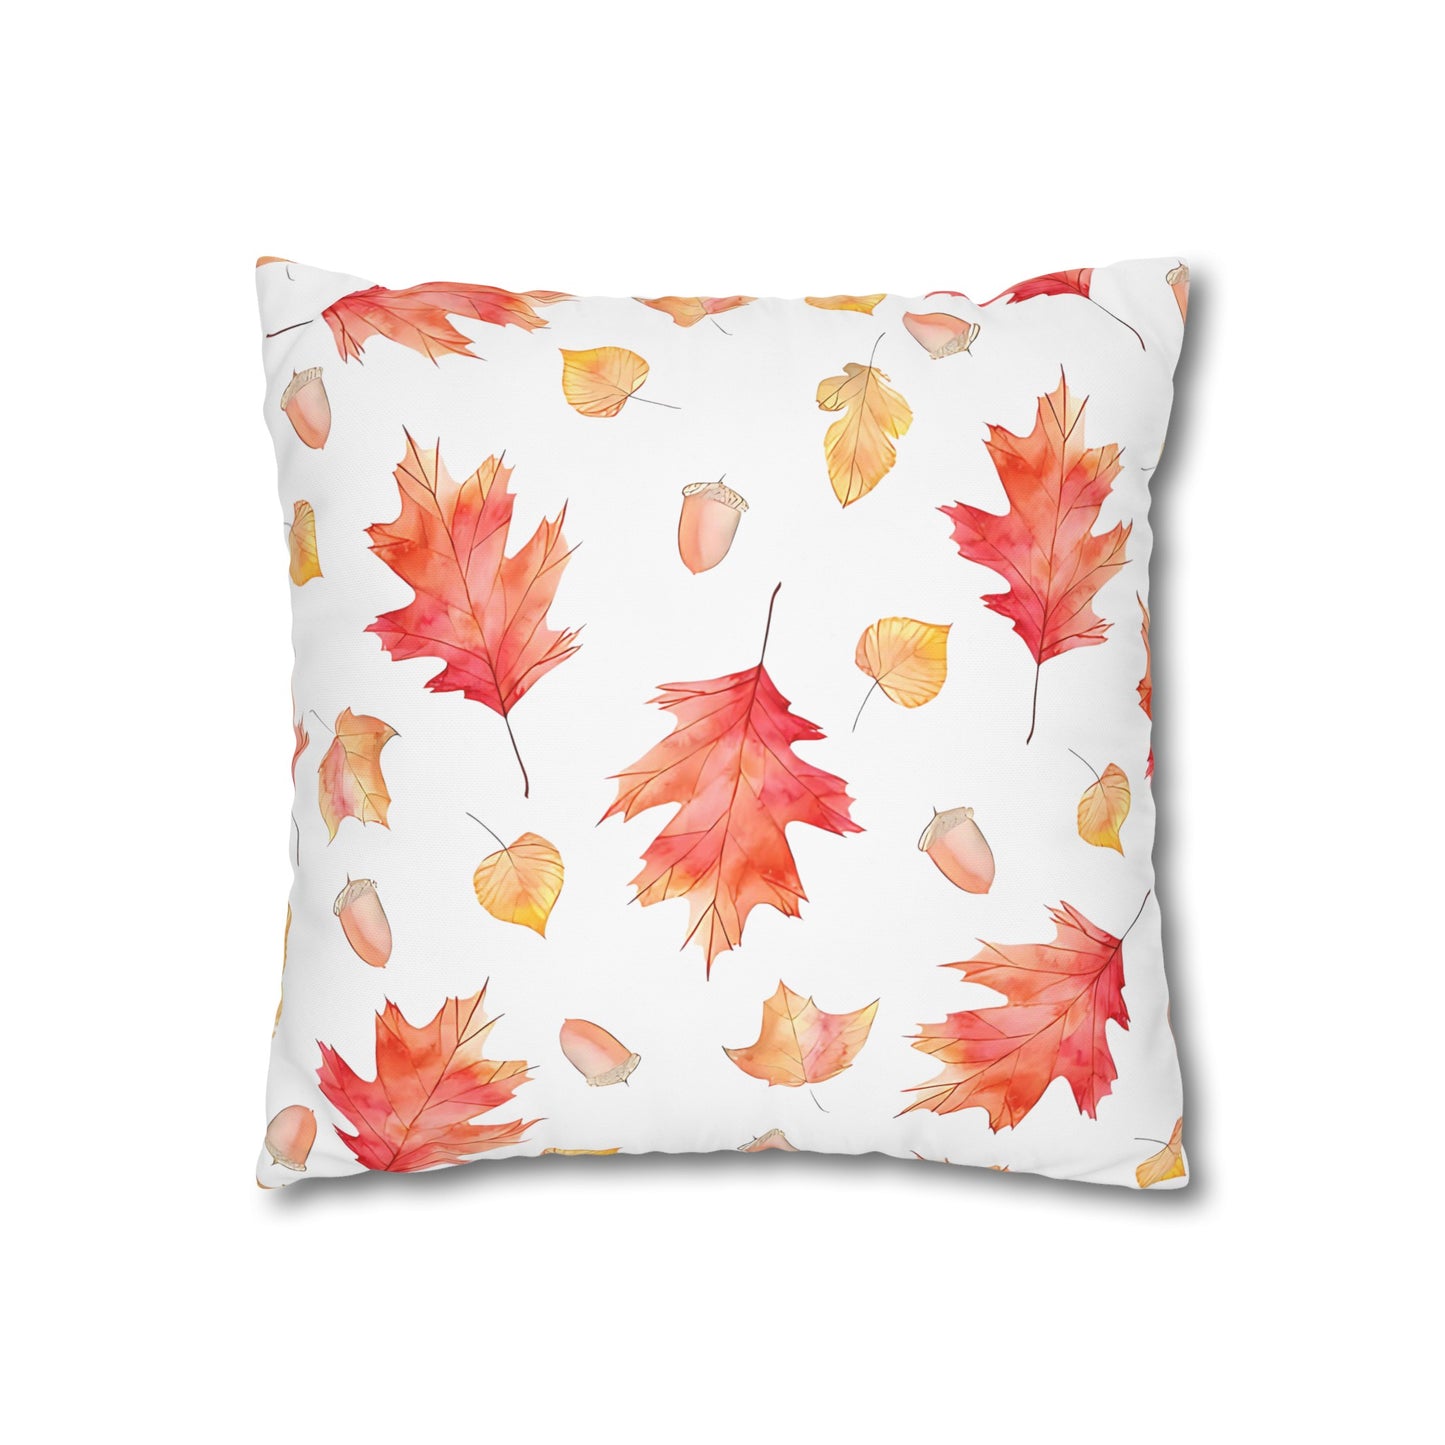 Autumn Leaves & Acorn Cushion Cover